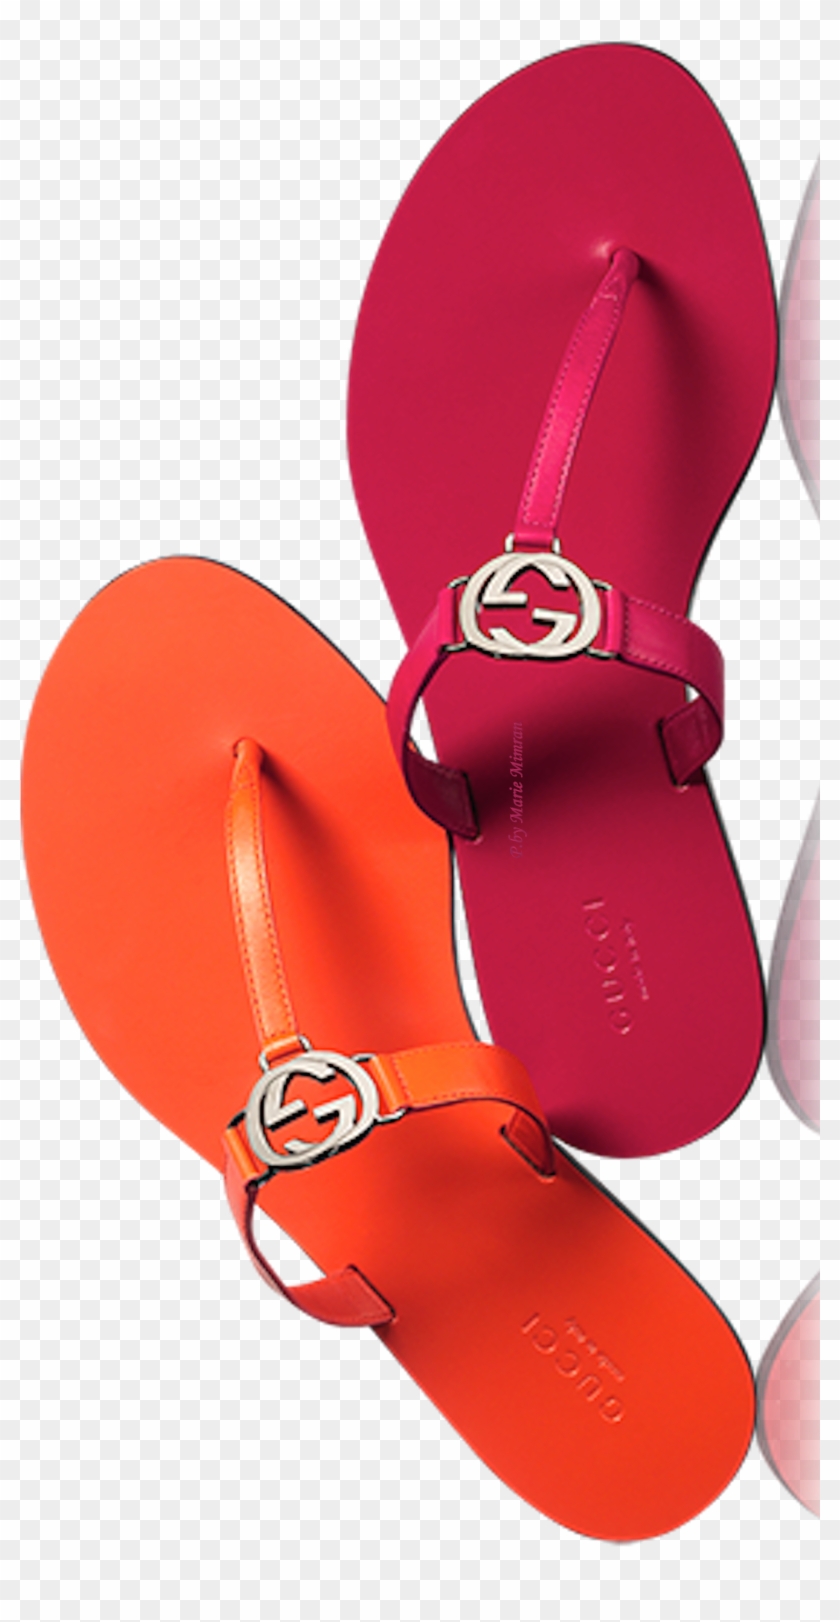 orange gucci flip flops